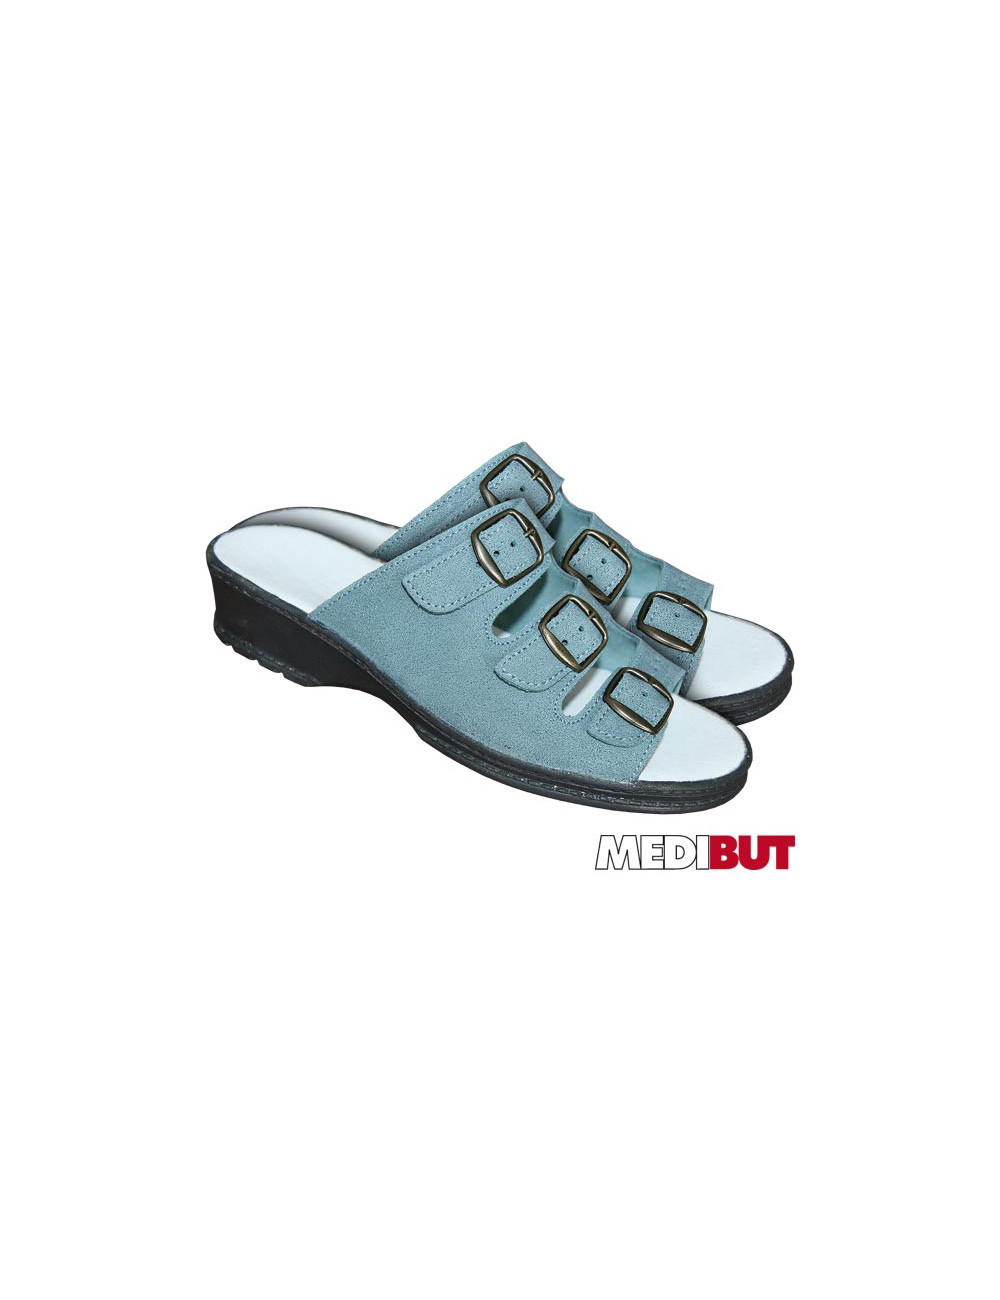 Occupational shoes bmbioform n blue Medibut